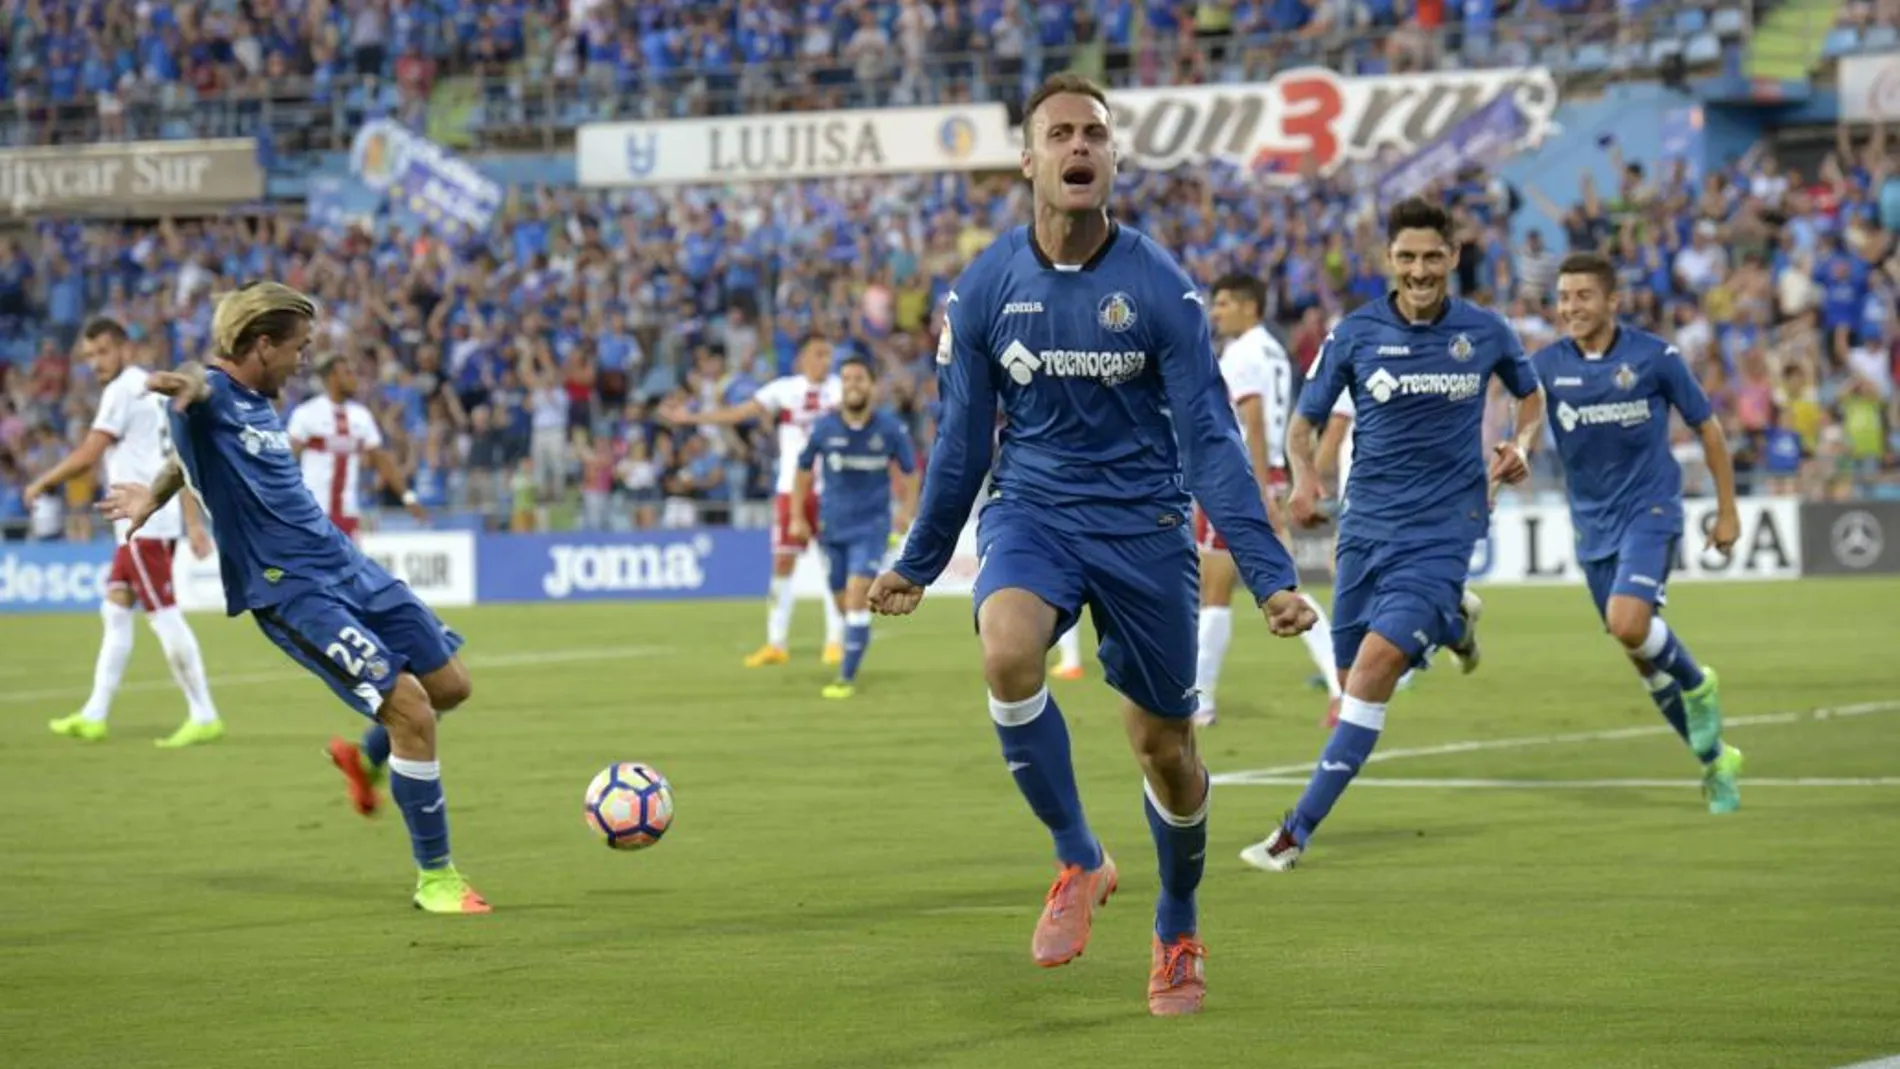 El defensa del Getafe Juan Cala celebra su gol frente al Huesca